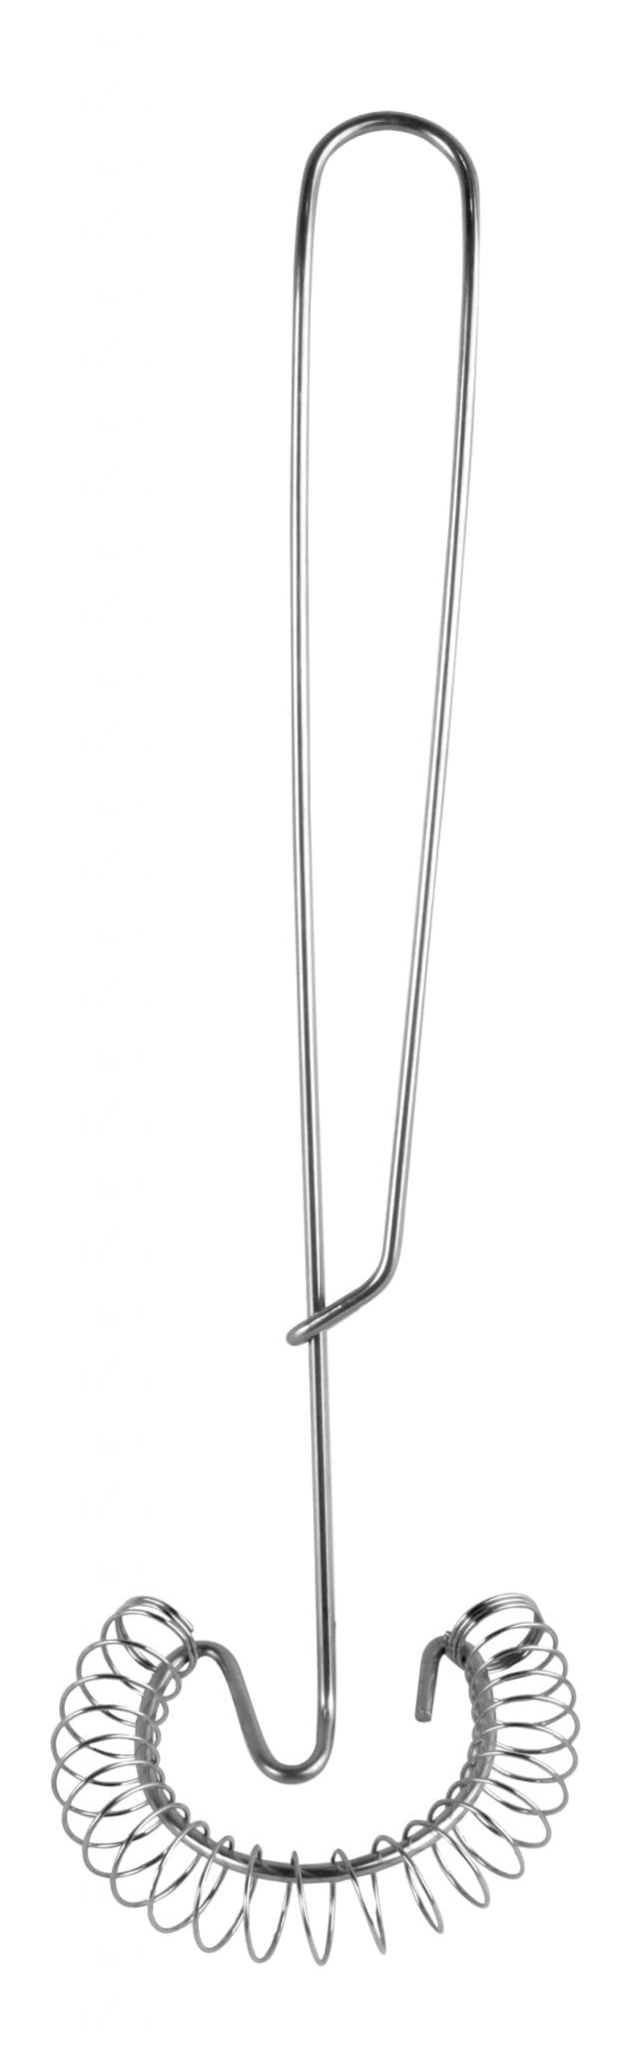 Spiraalgarde, 26,5 cm - Merx